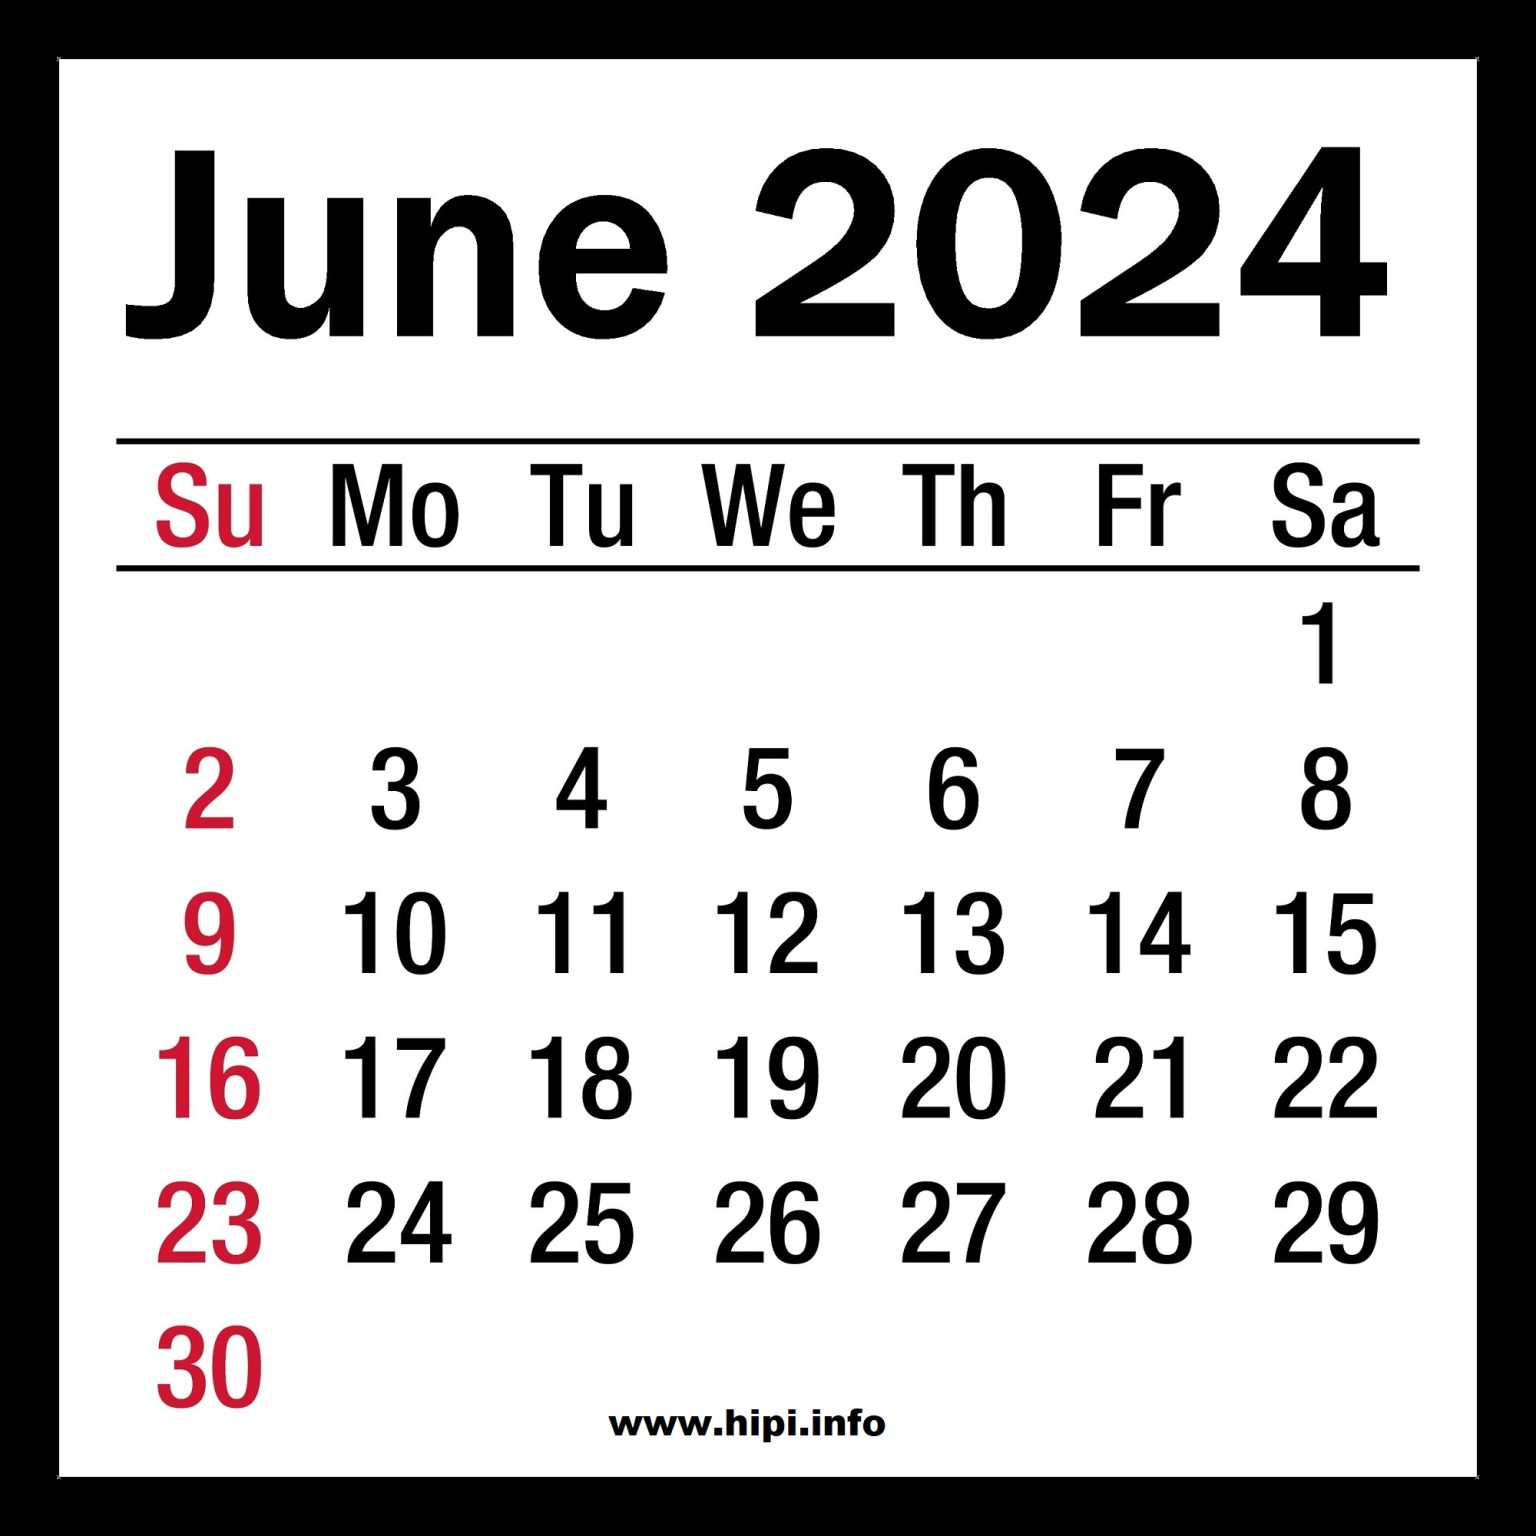 June 2024 Calendar - Hipi.info